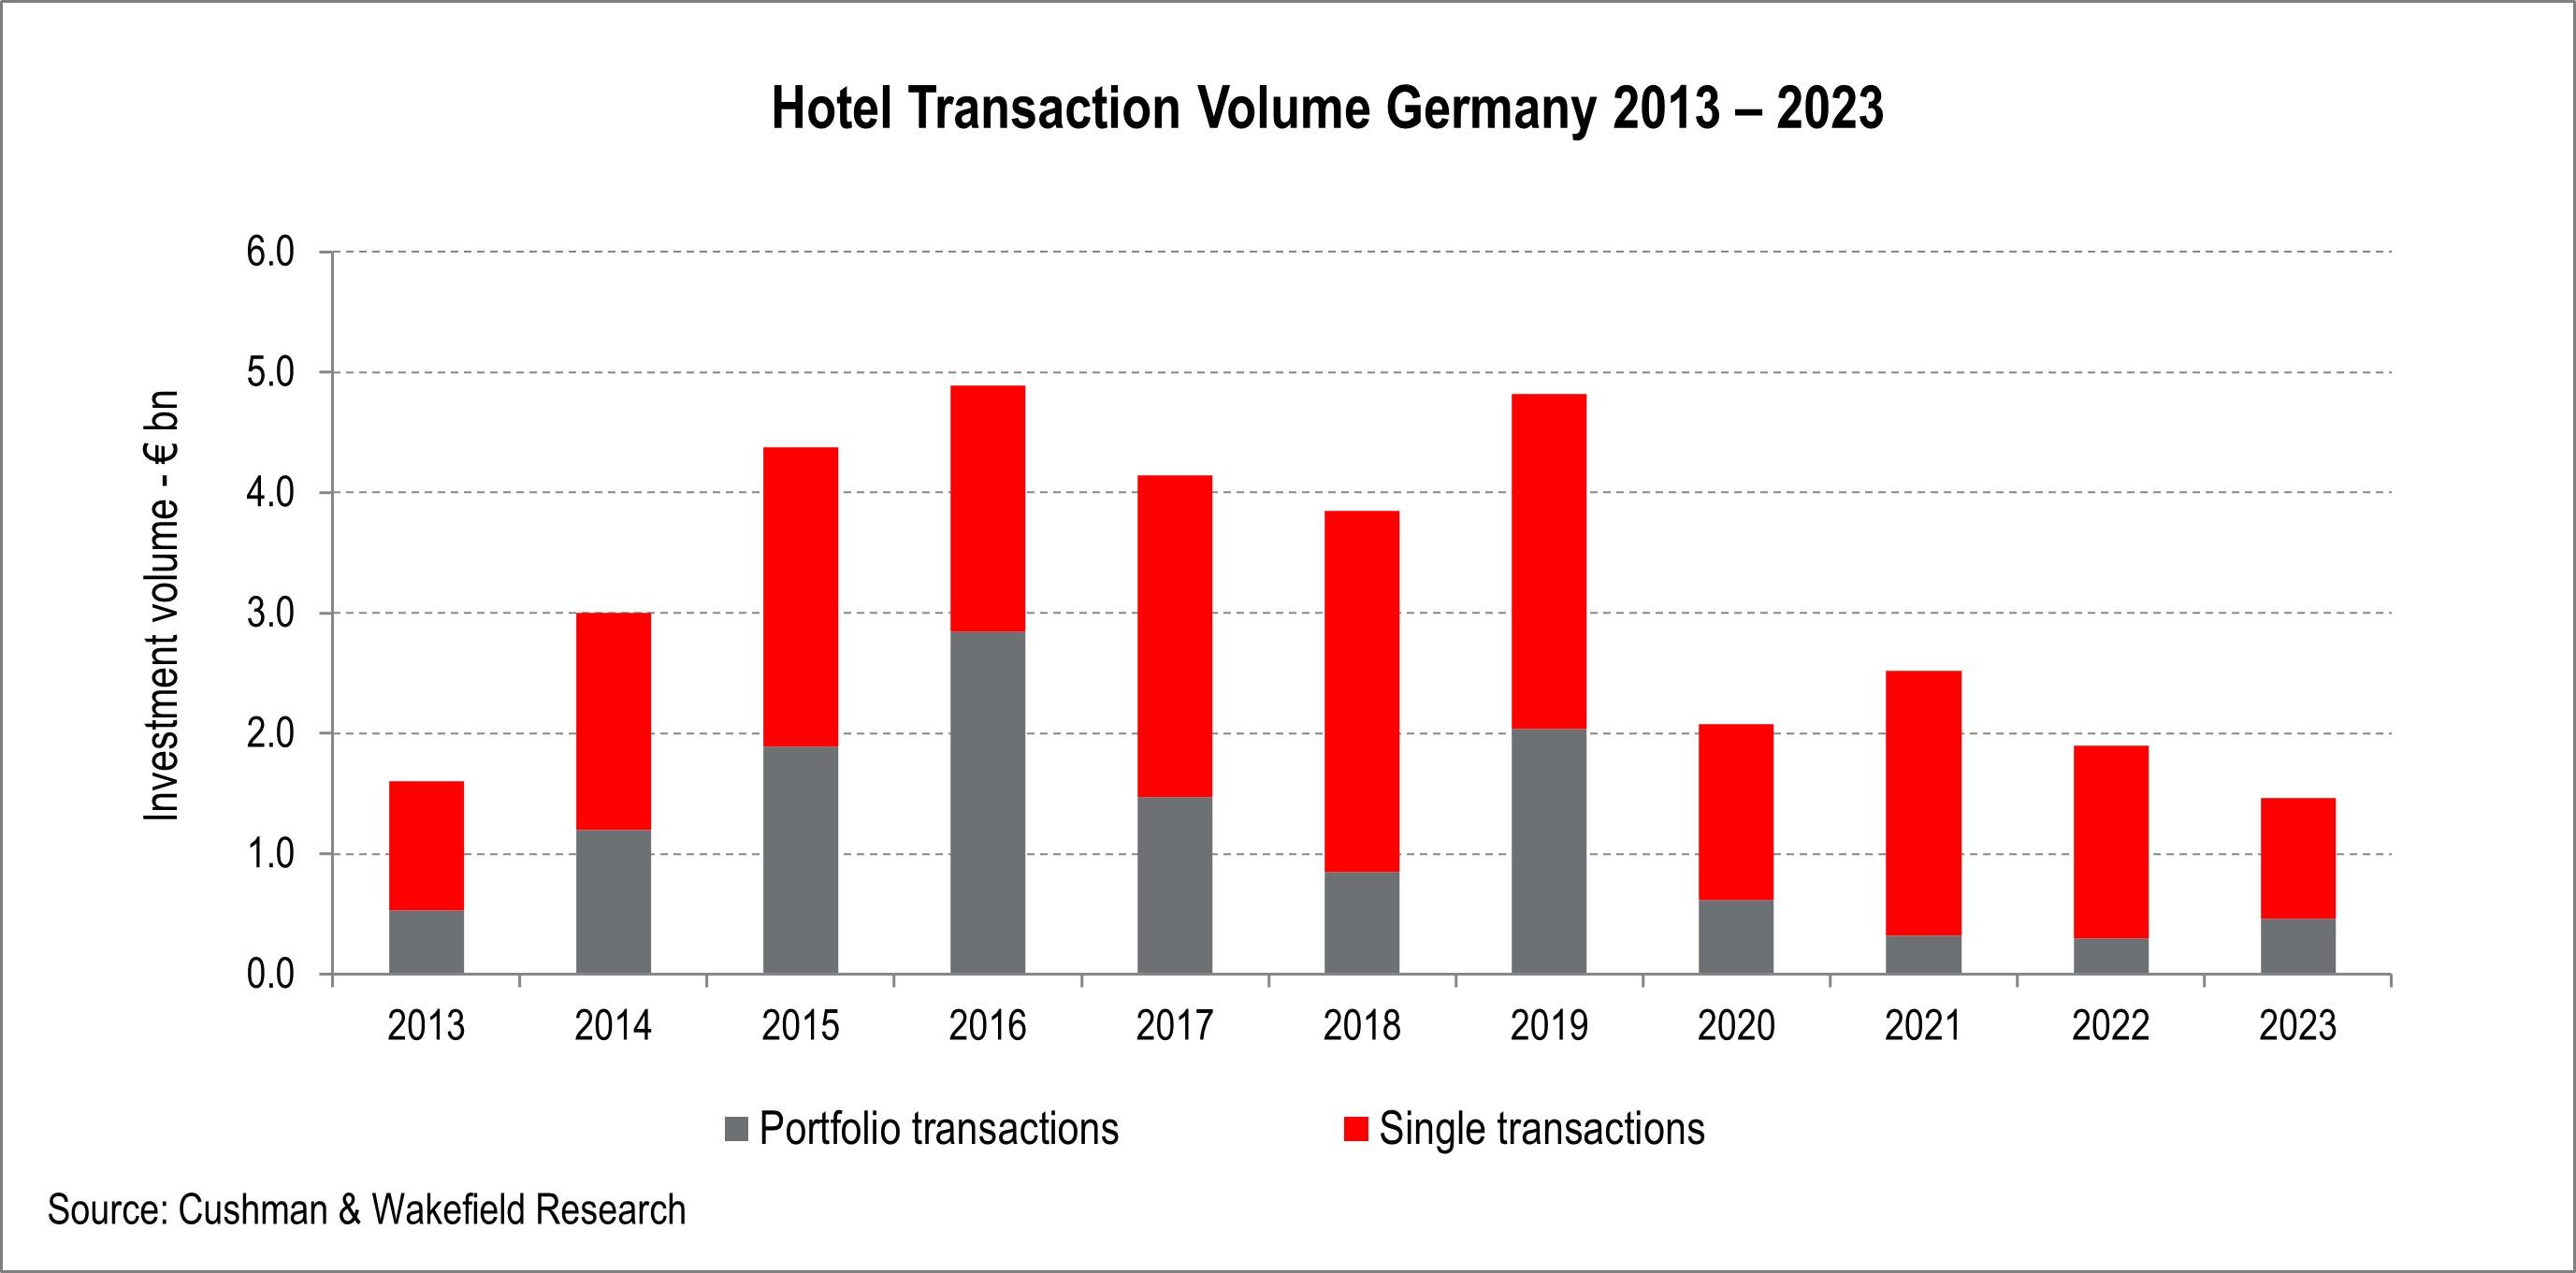 Hotel Transaction Volume Germany Q4 2023